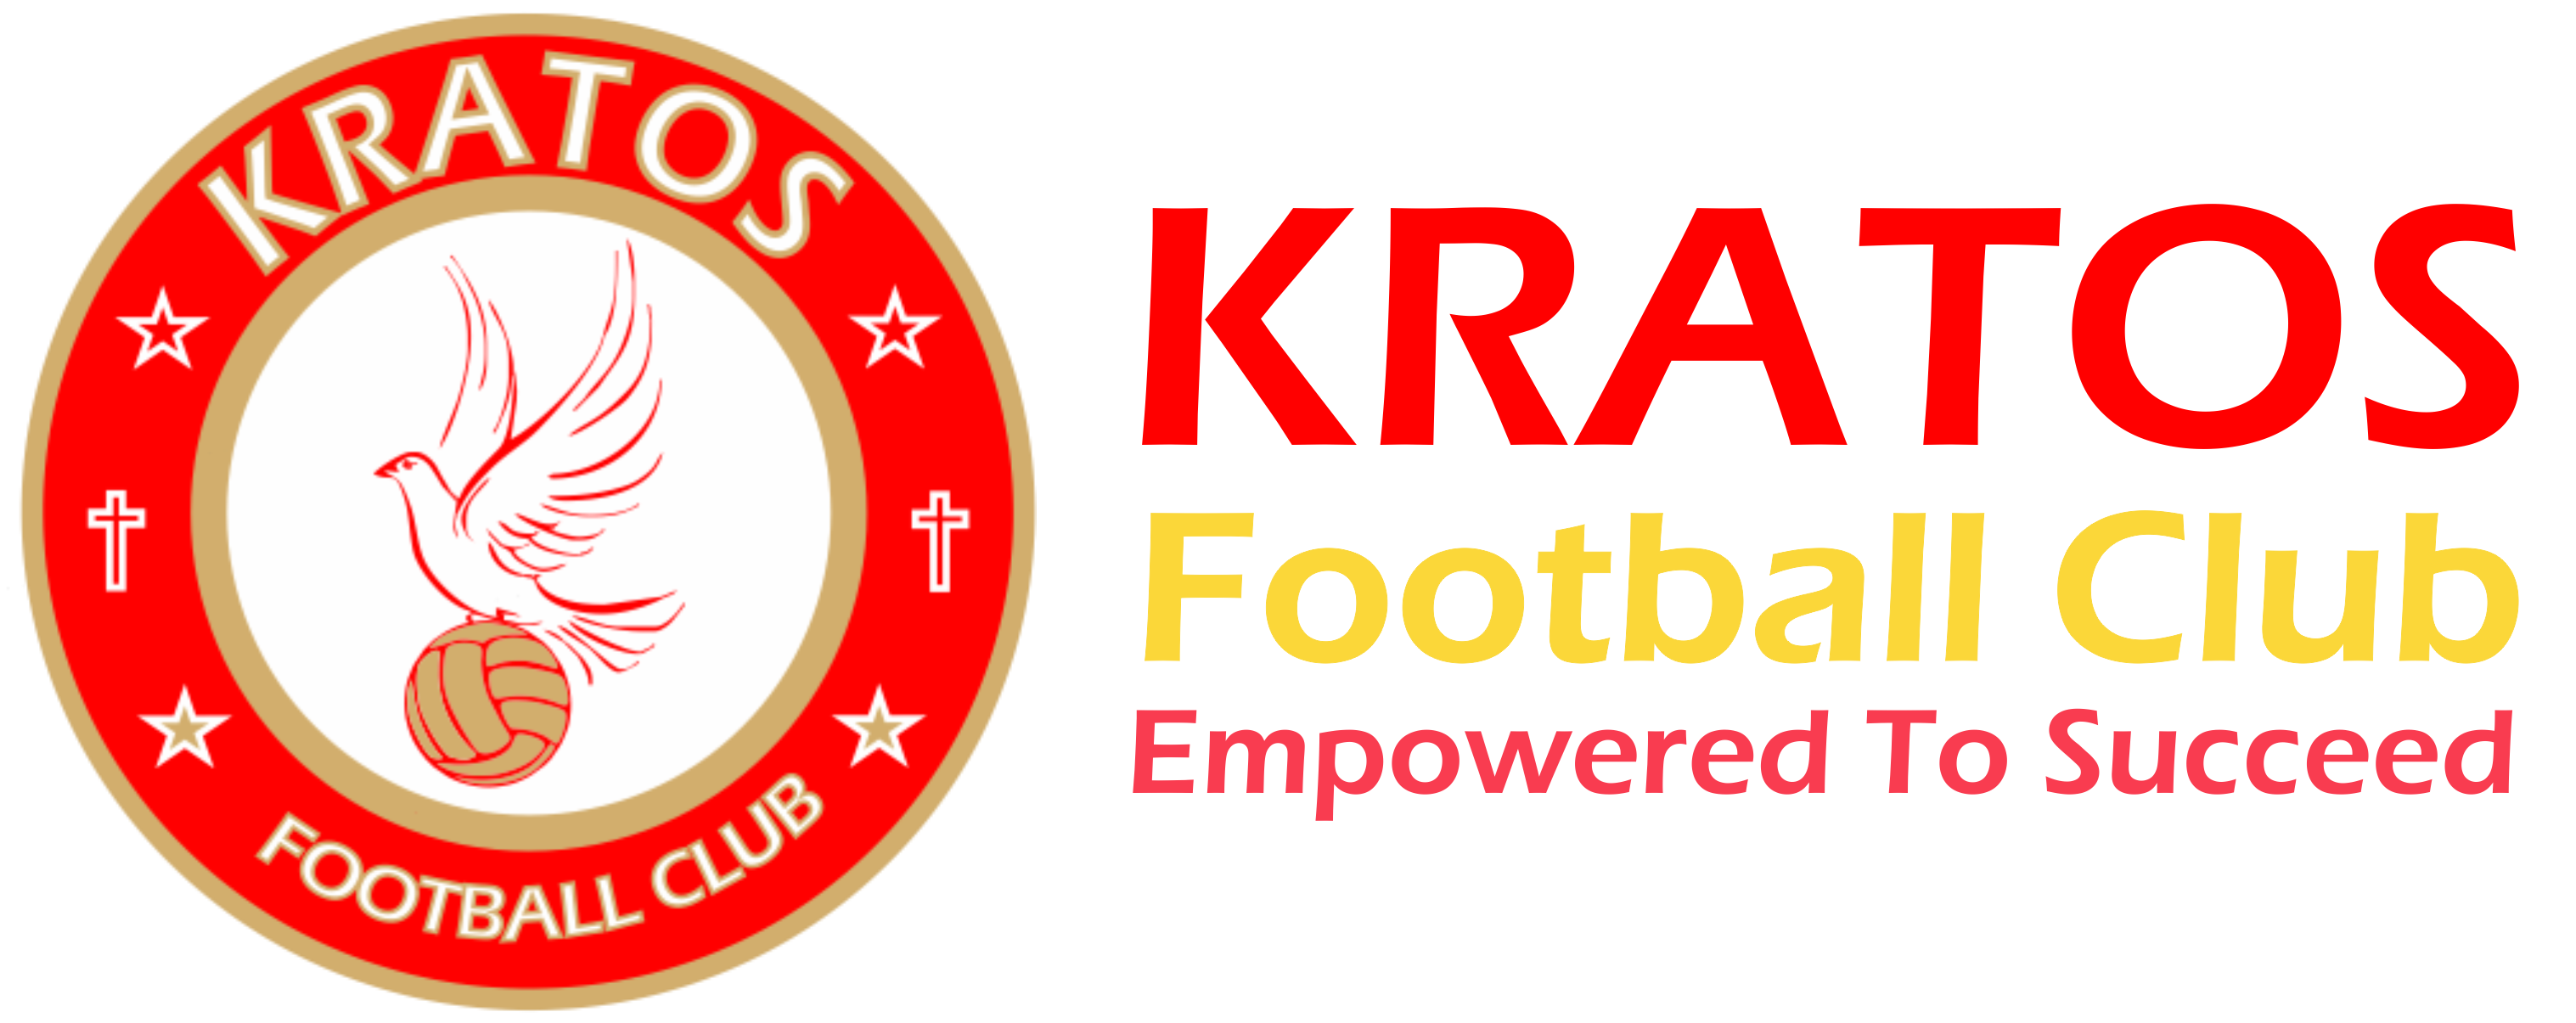 Kratos Football Club